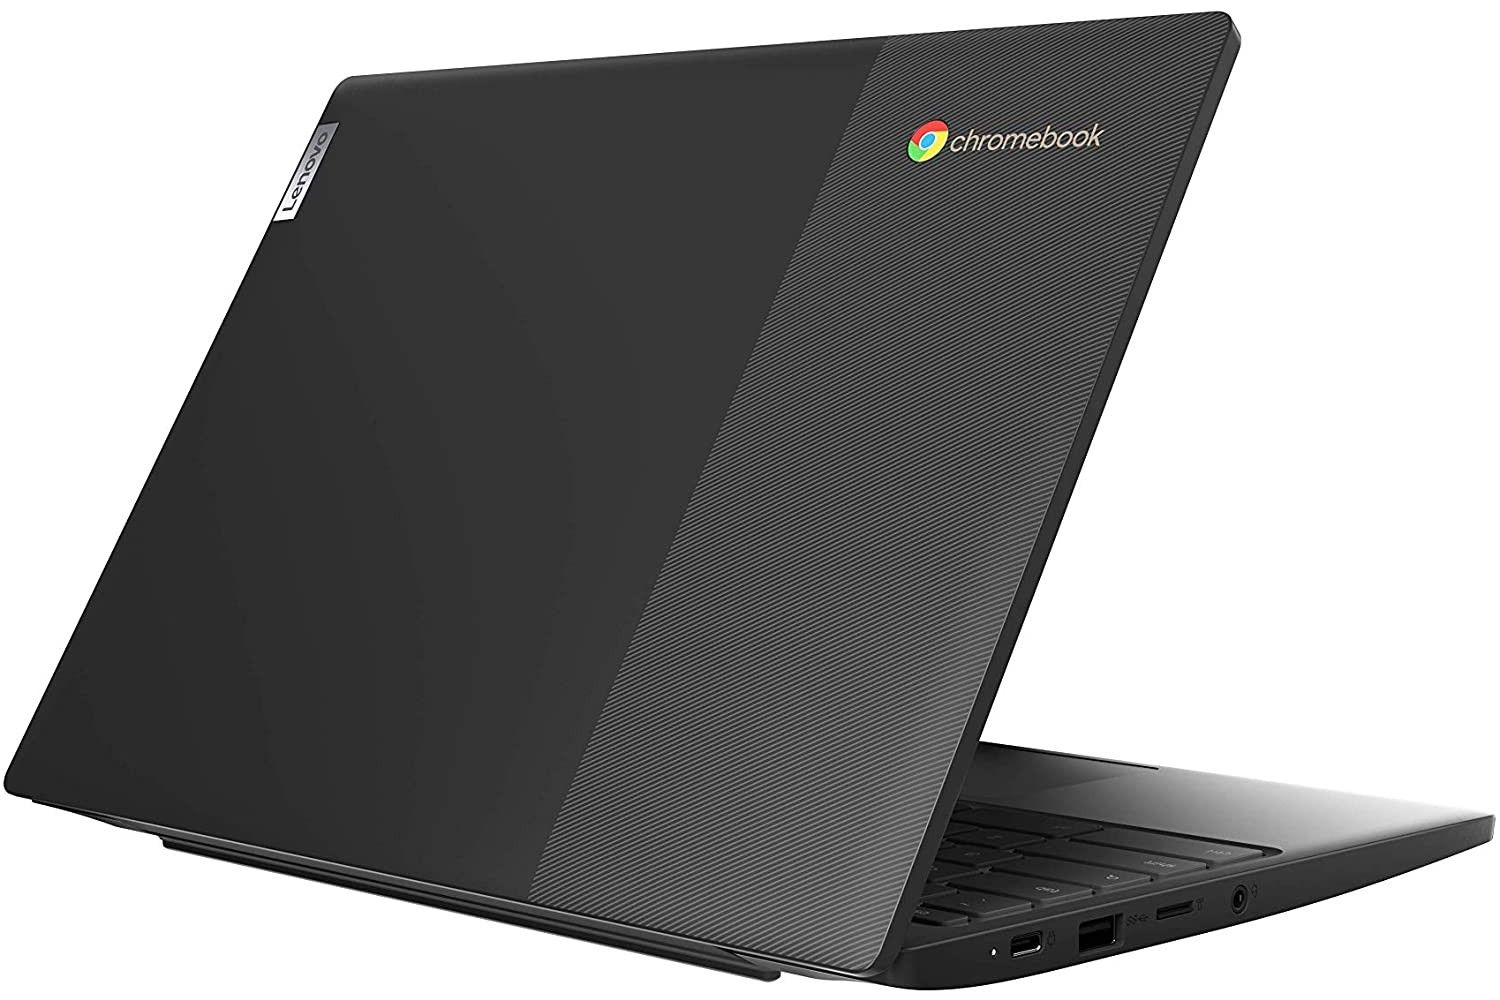 Lenovo Chromebook 3 11-inch